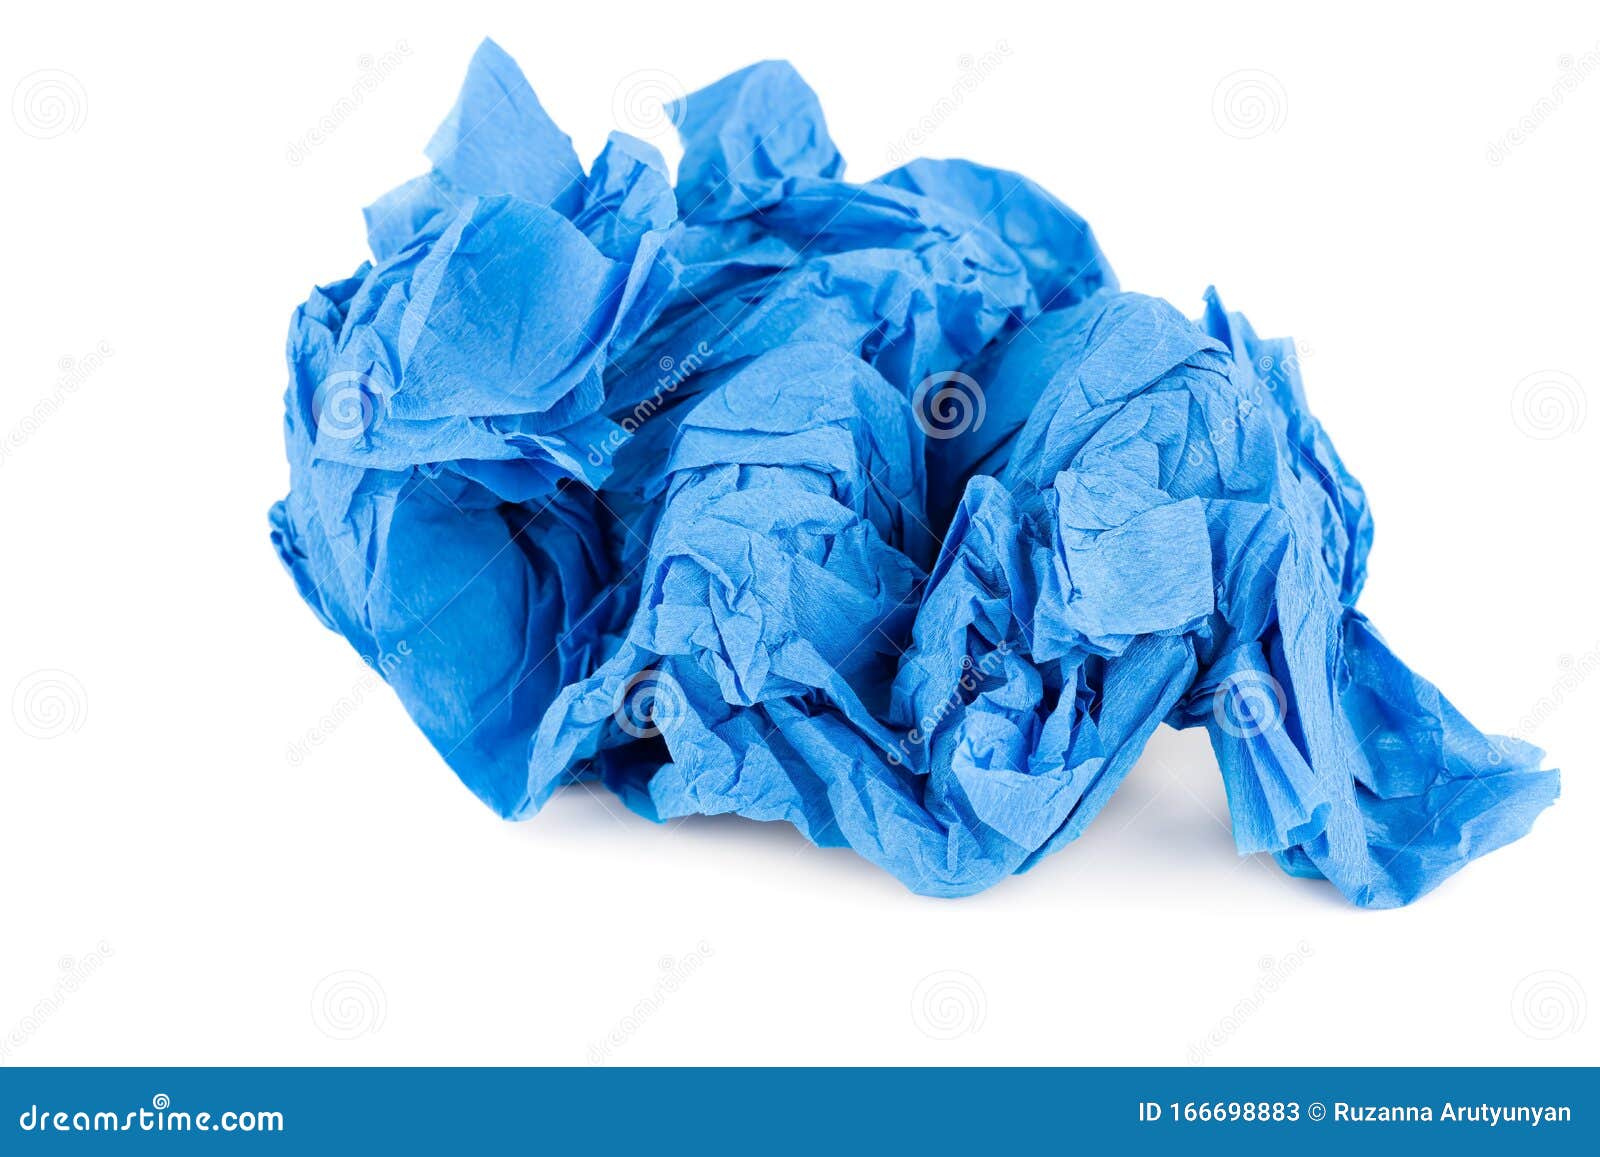 2. "Blue Crepe Paper Hair Dye" by Arctic Fox - wide 6